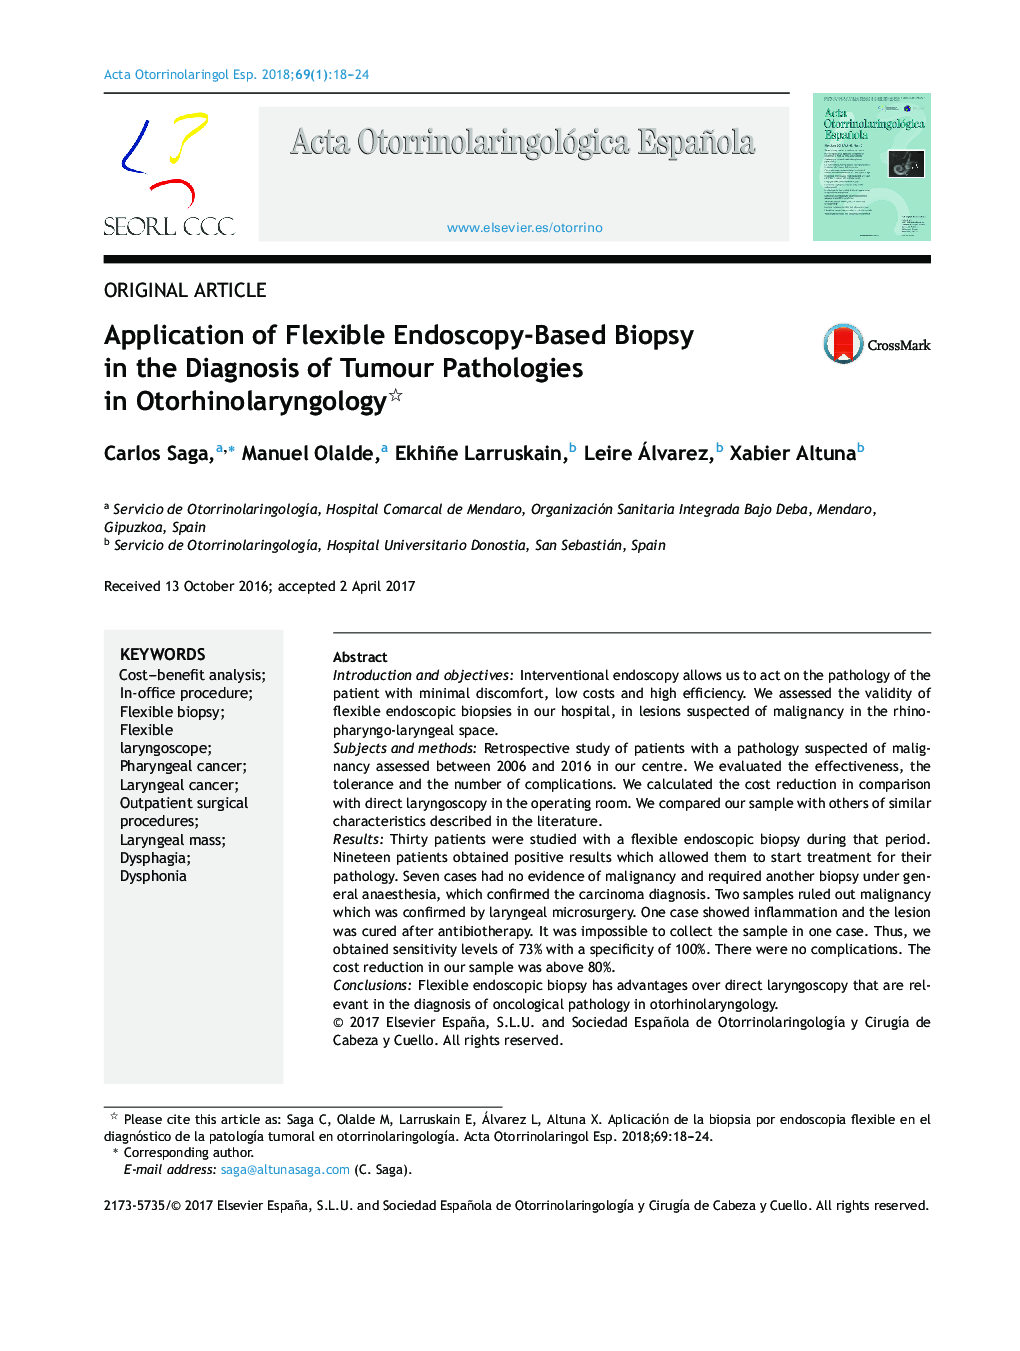 Application of Flexible Endoscopy-Based Biopsy in the Diagnosis of Tumour Pathologies in Otorhinolaryngology